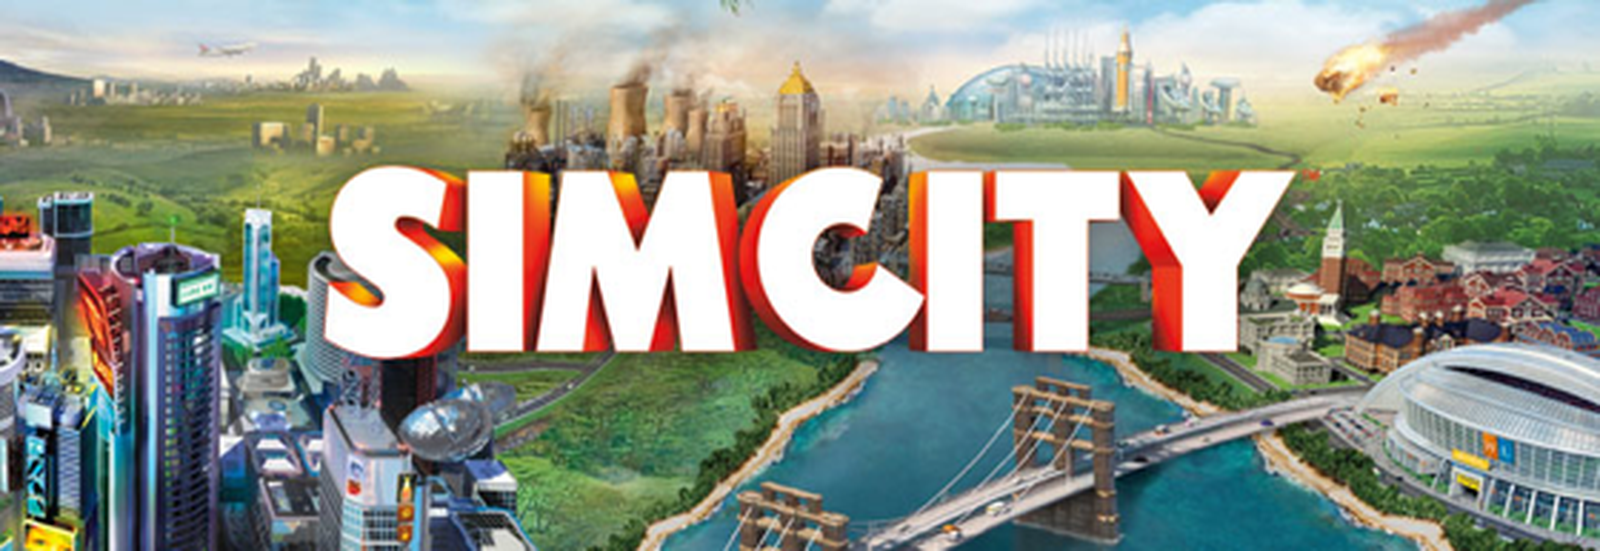 New SimCity Coming to Mac in February 2013 - MacRumors